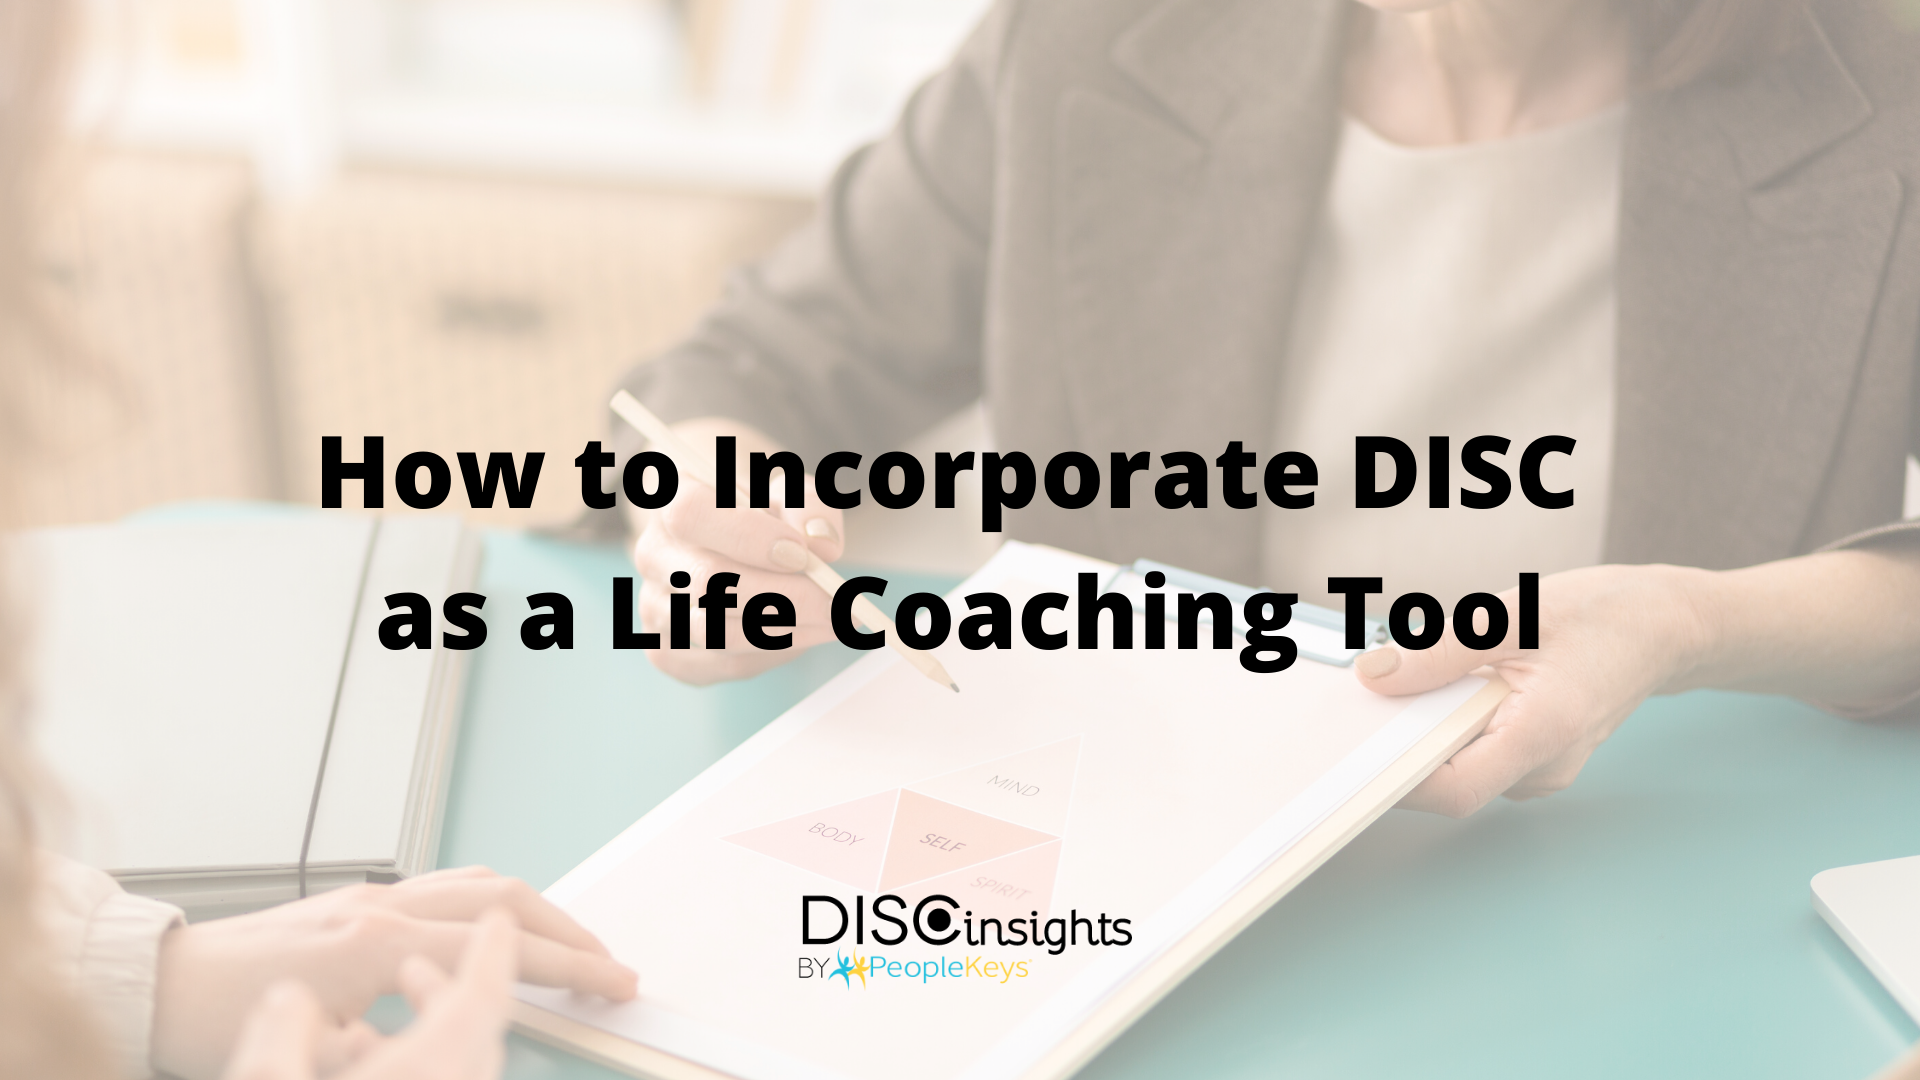 Life-coaching-tools-DISC